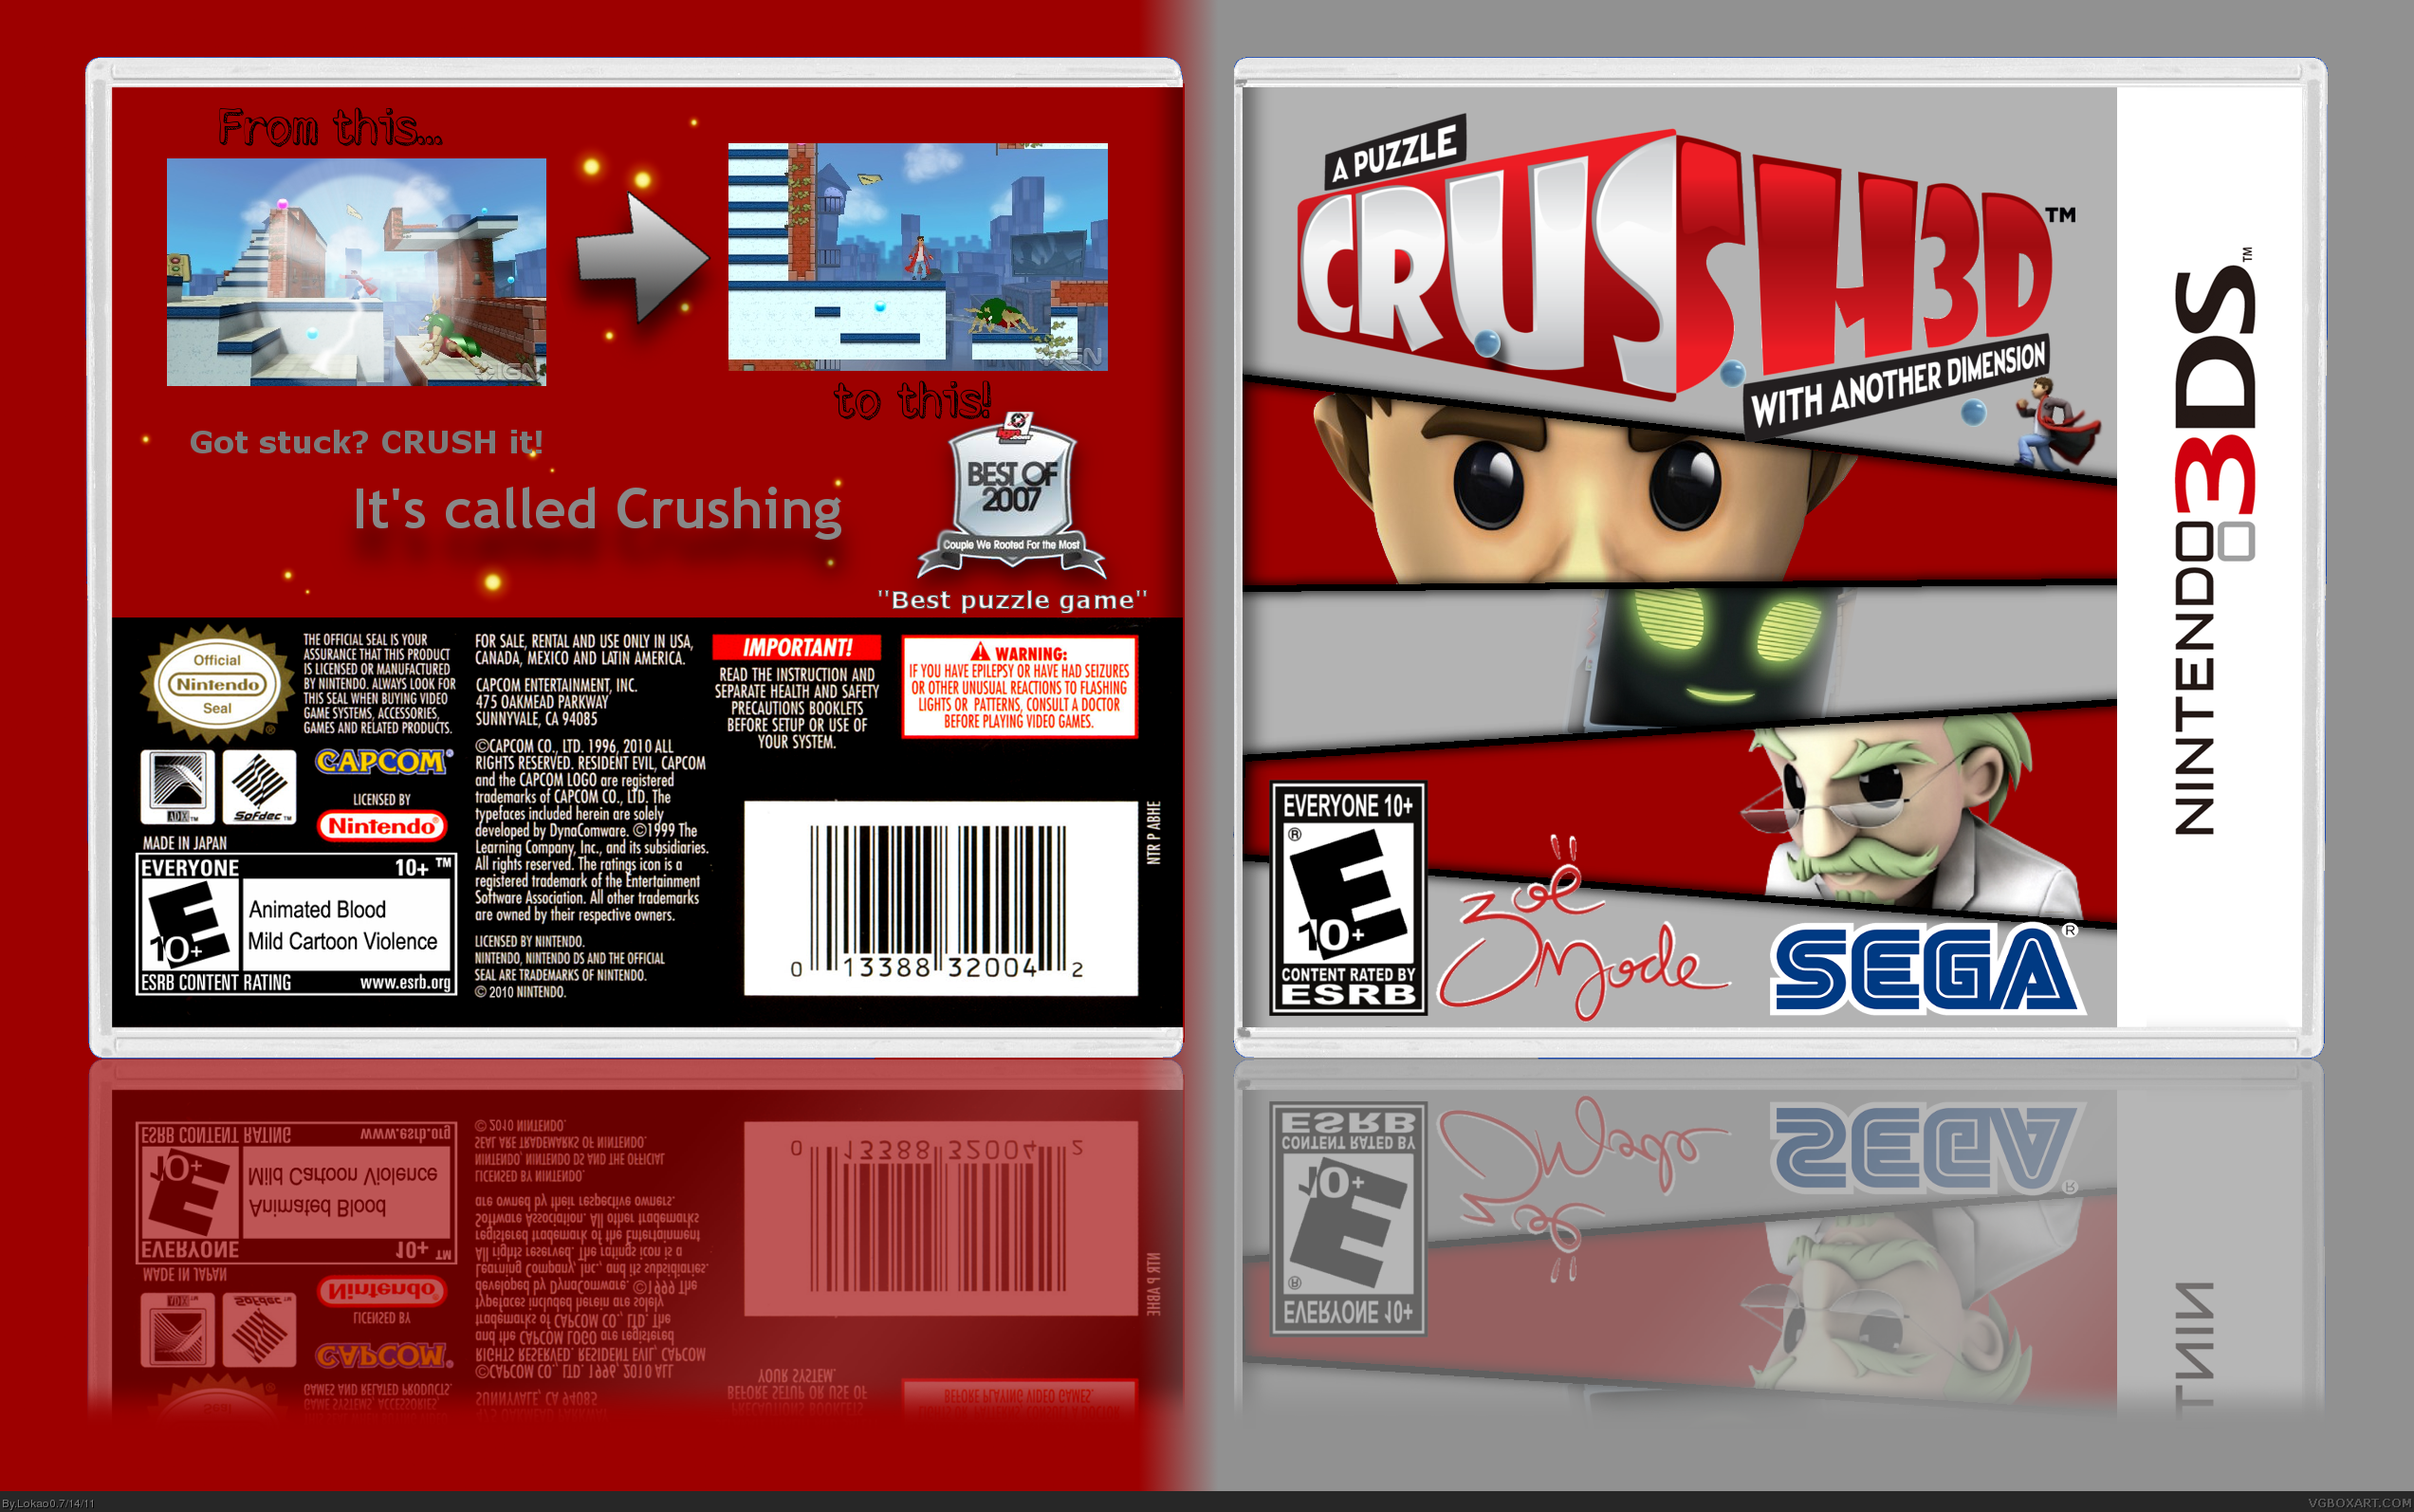 Crush 3D box cover